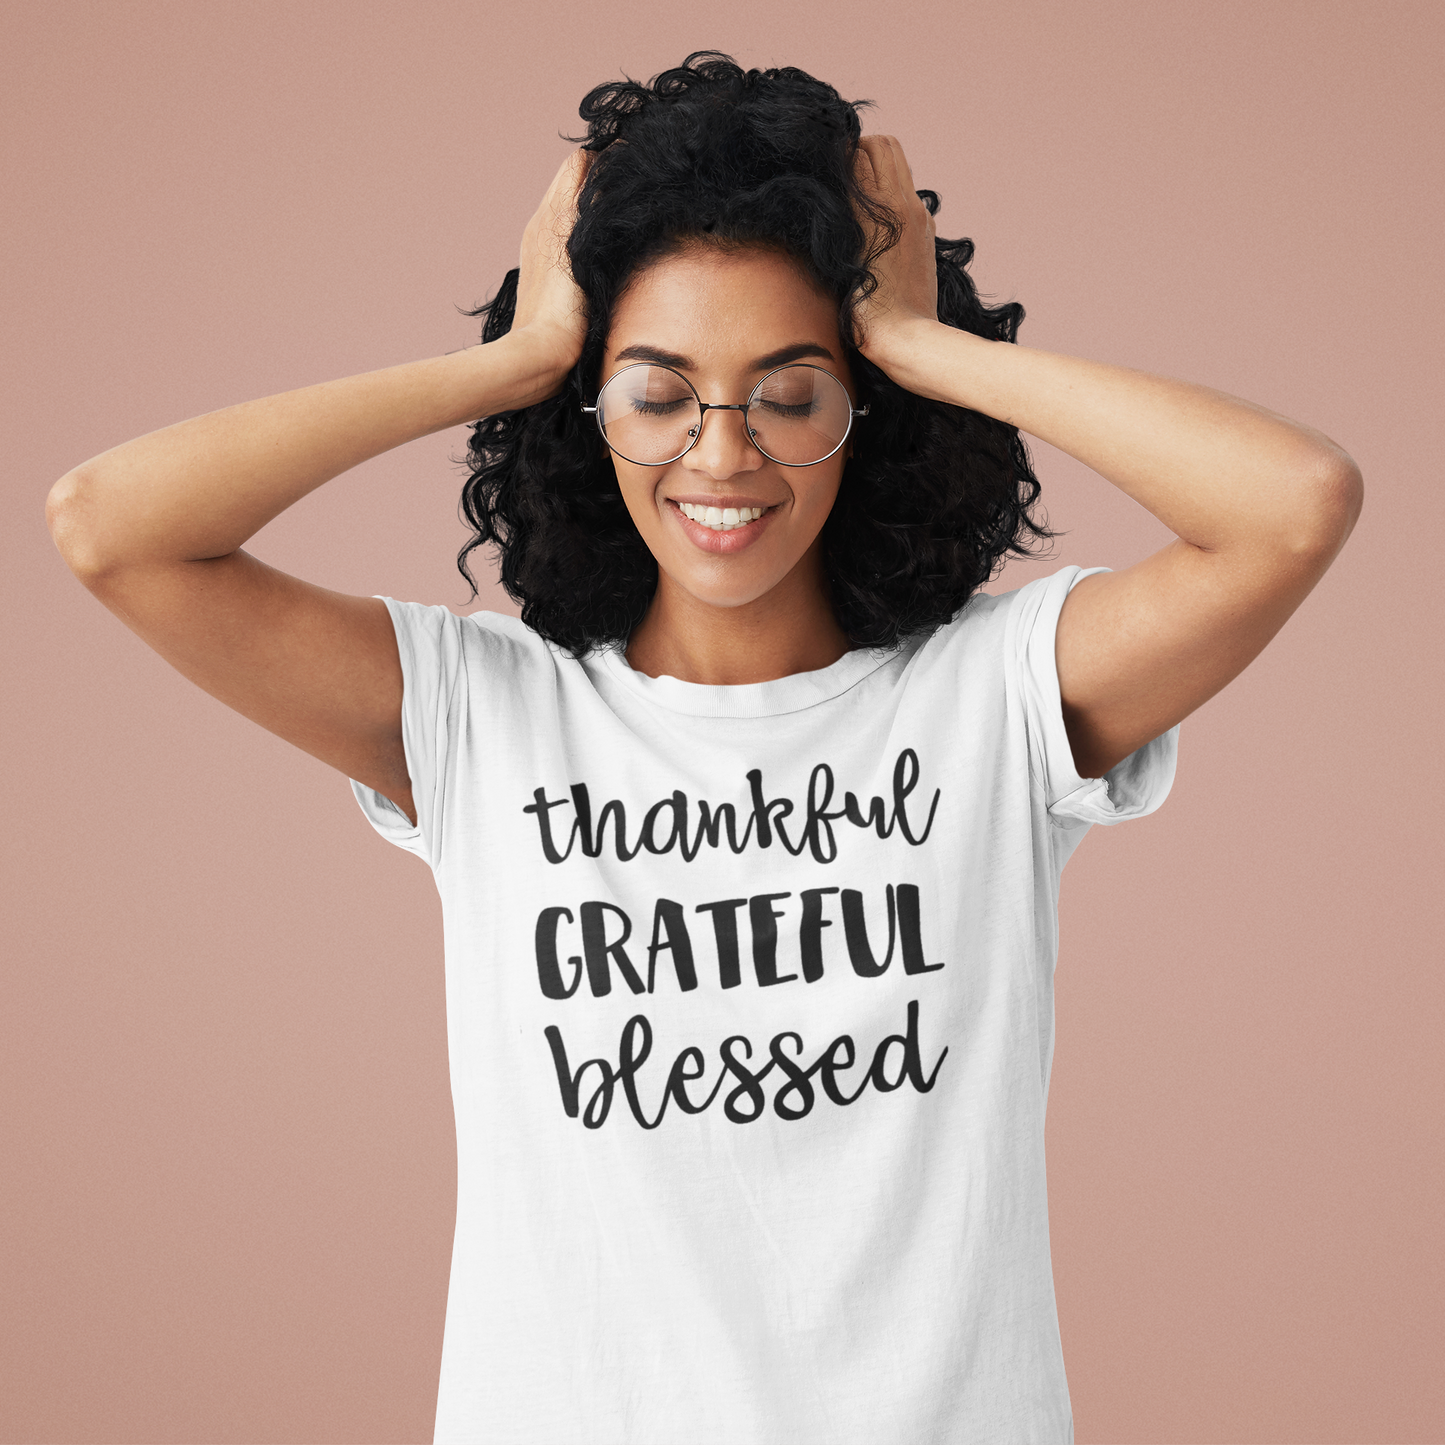 Thankful, Grateful, Blessed T-shirt